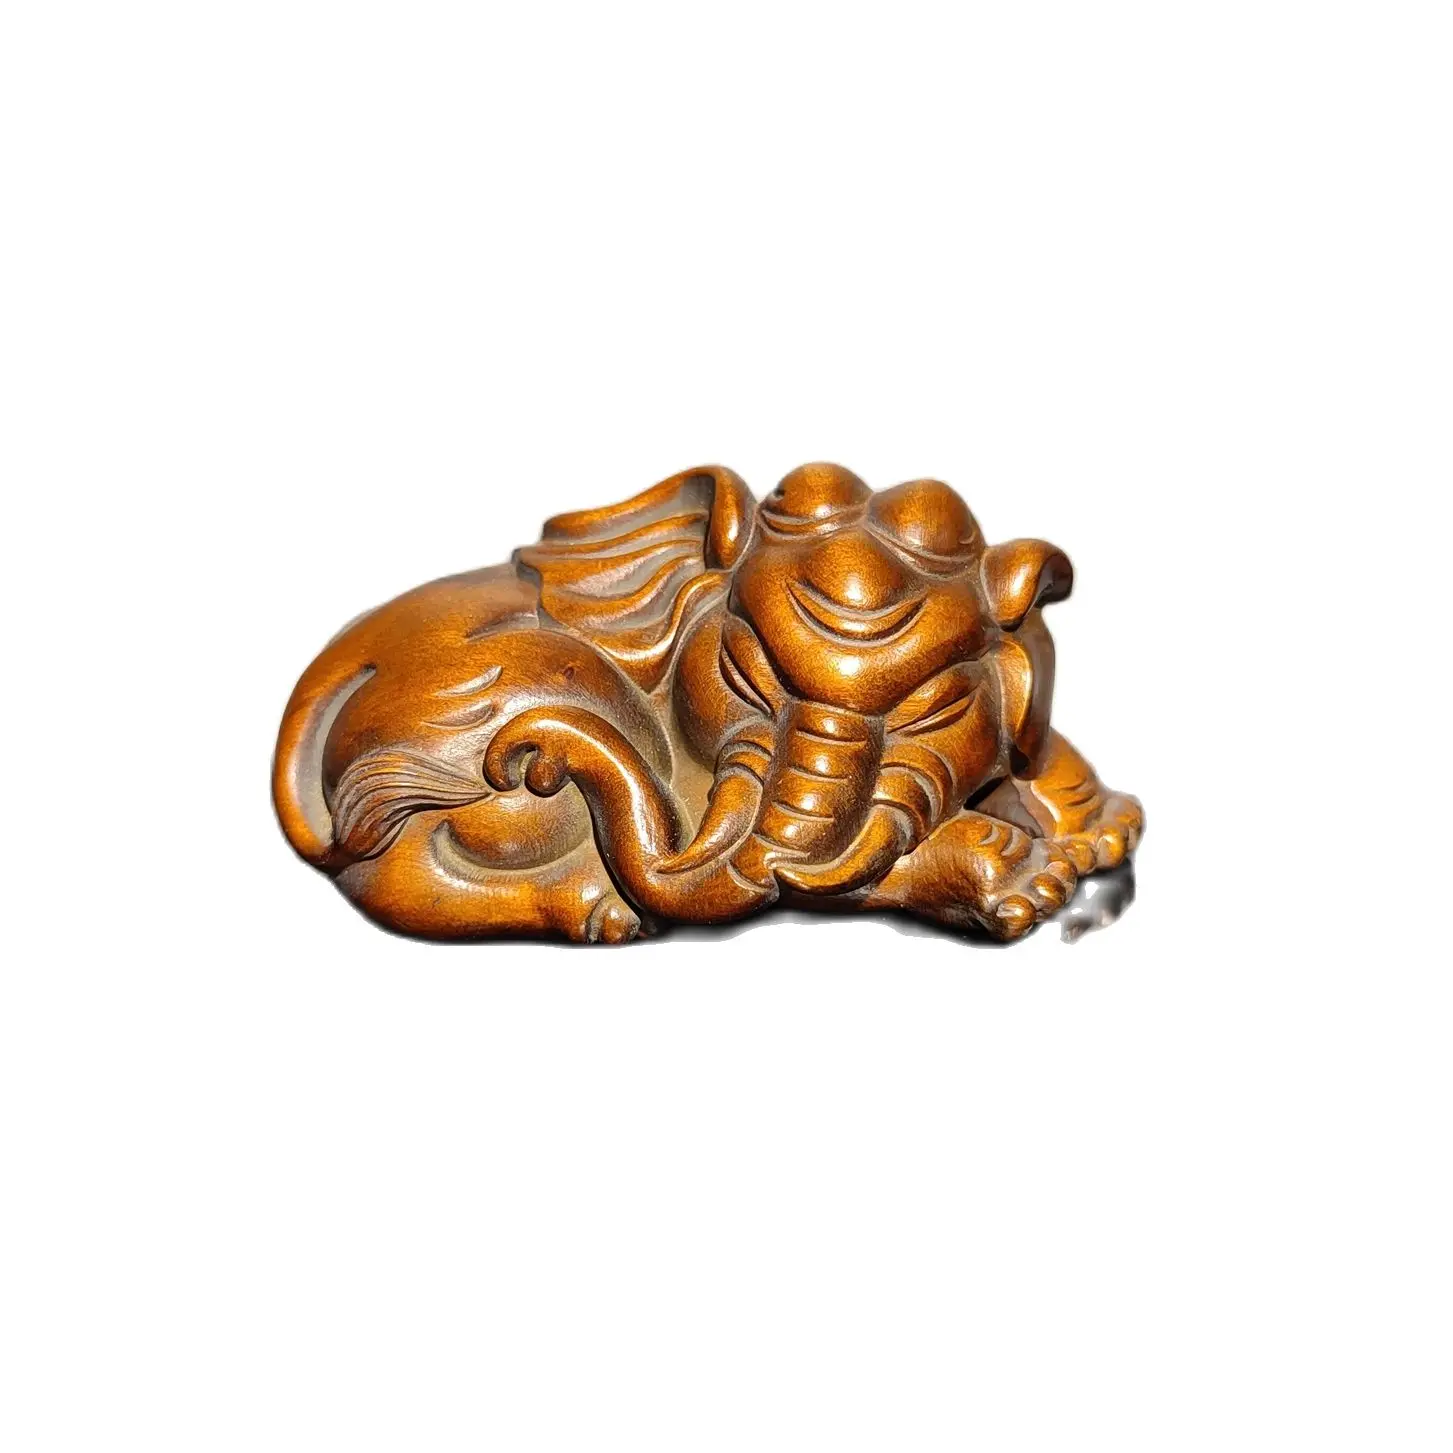 

Wooden Brown Carving Chinese Elephant Sculpture Statue Home Decor Figurines Zen decorative sculpture home decor